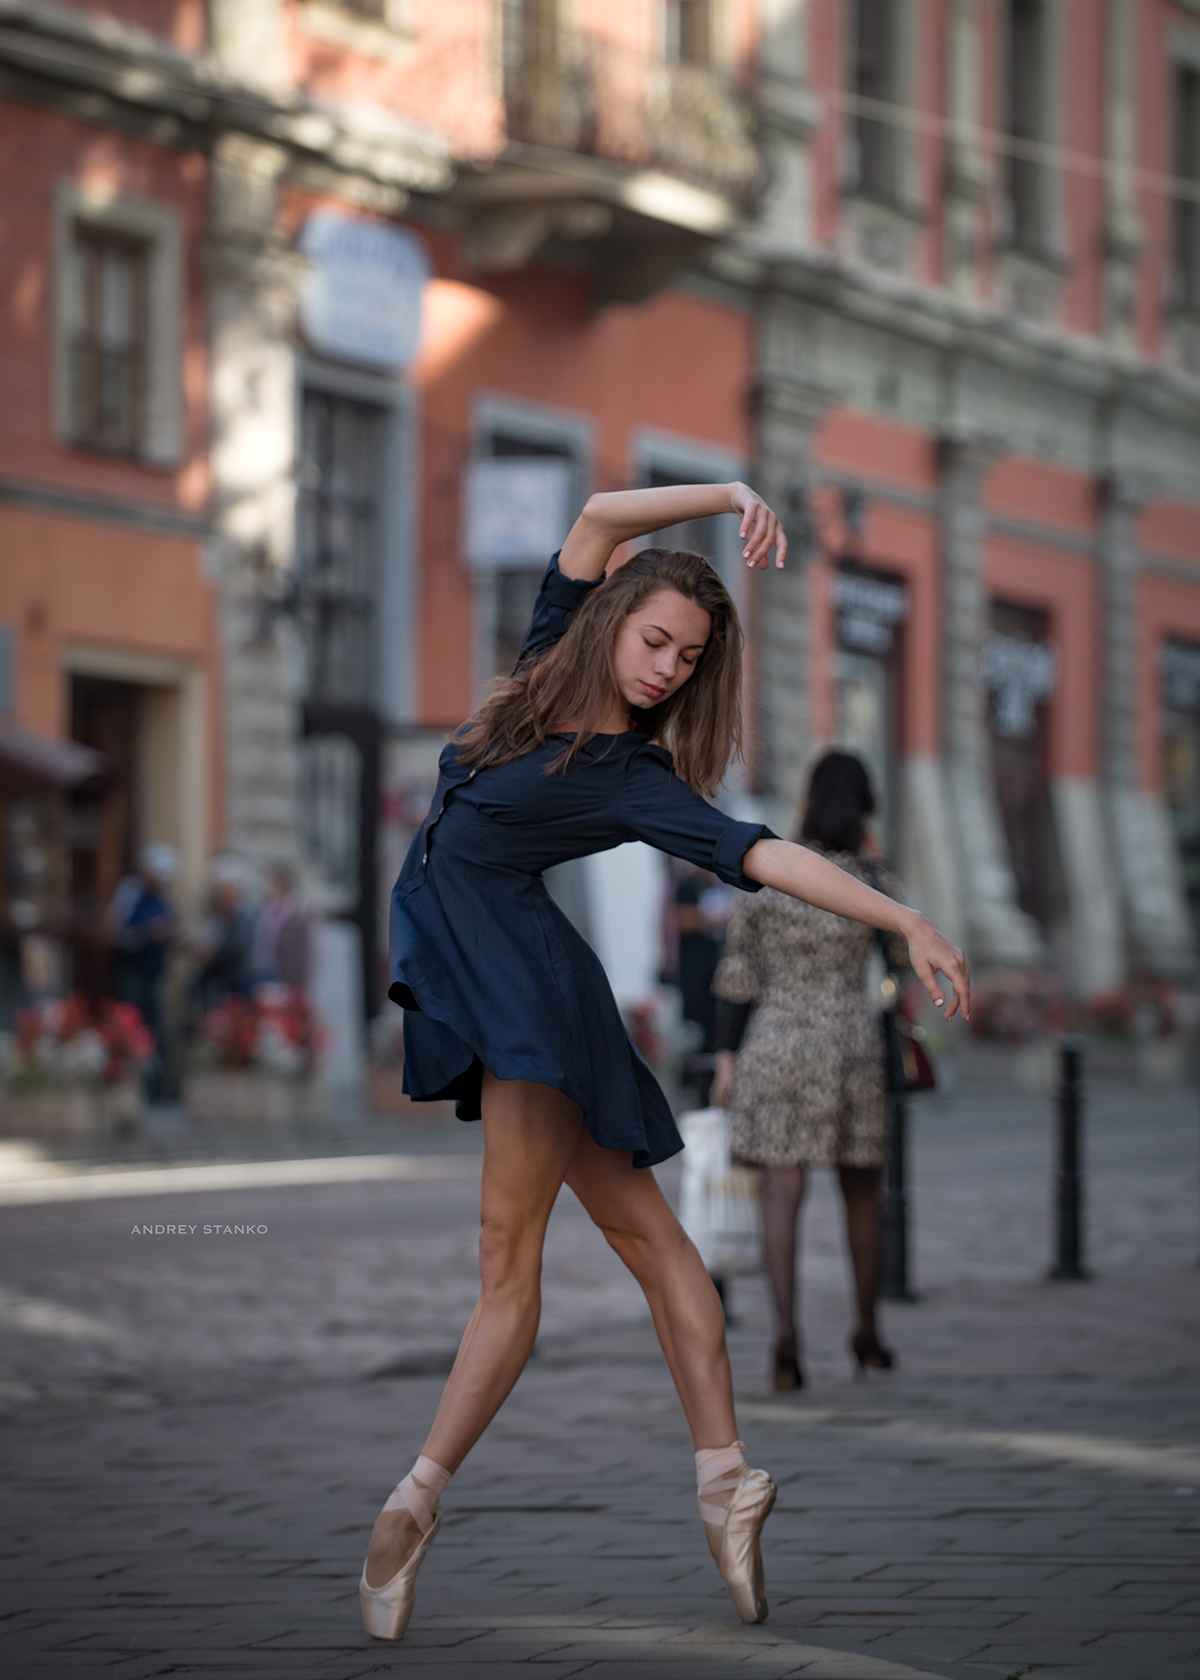 ballet ballerina dancer dancing balletshoes Balletdancer balletclass andreystanko balletphotography